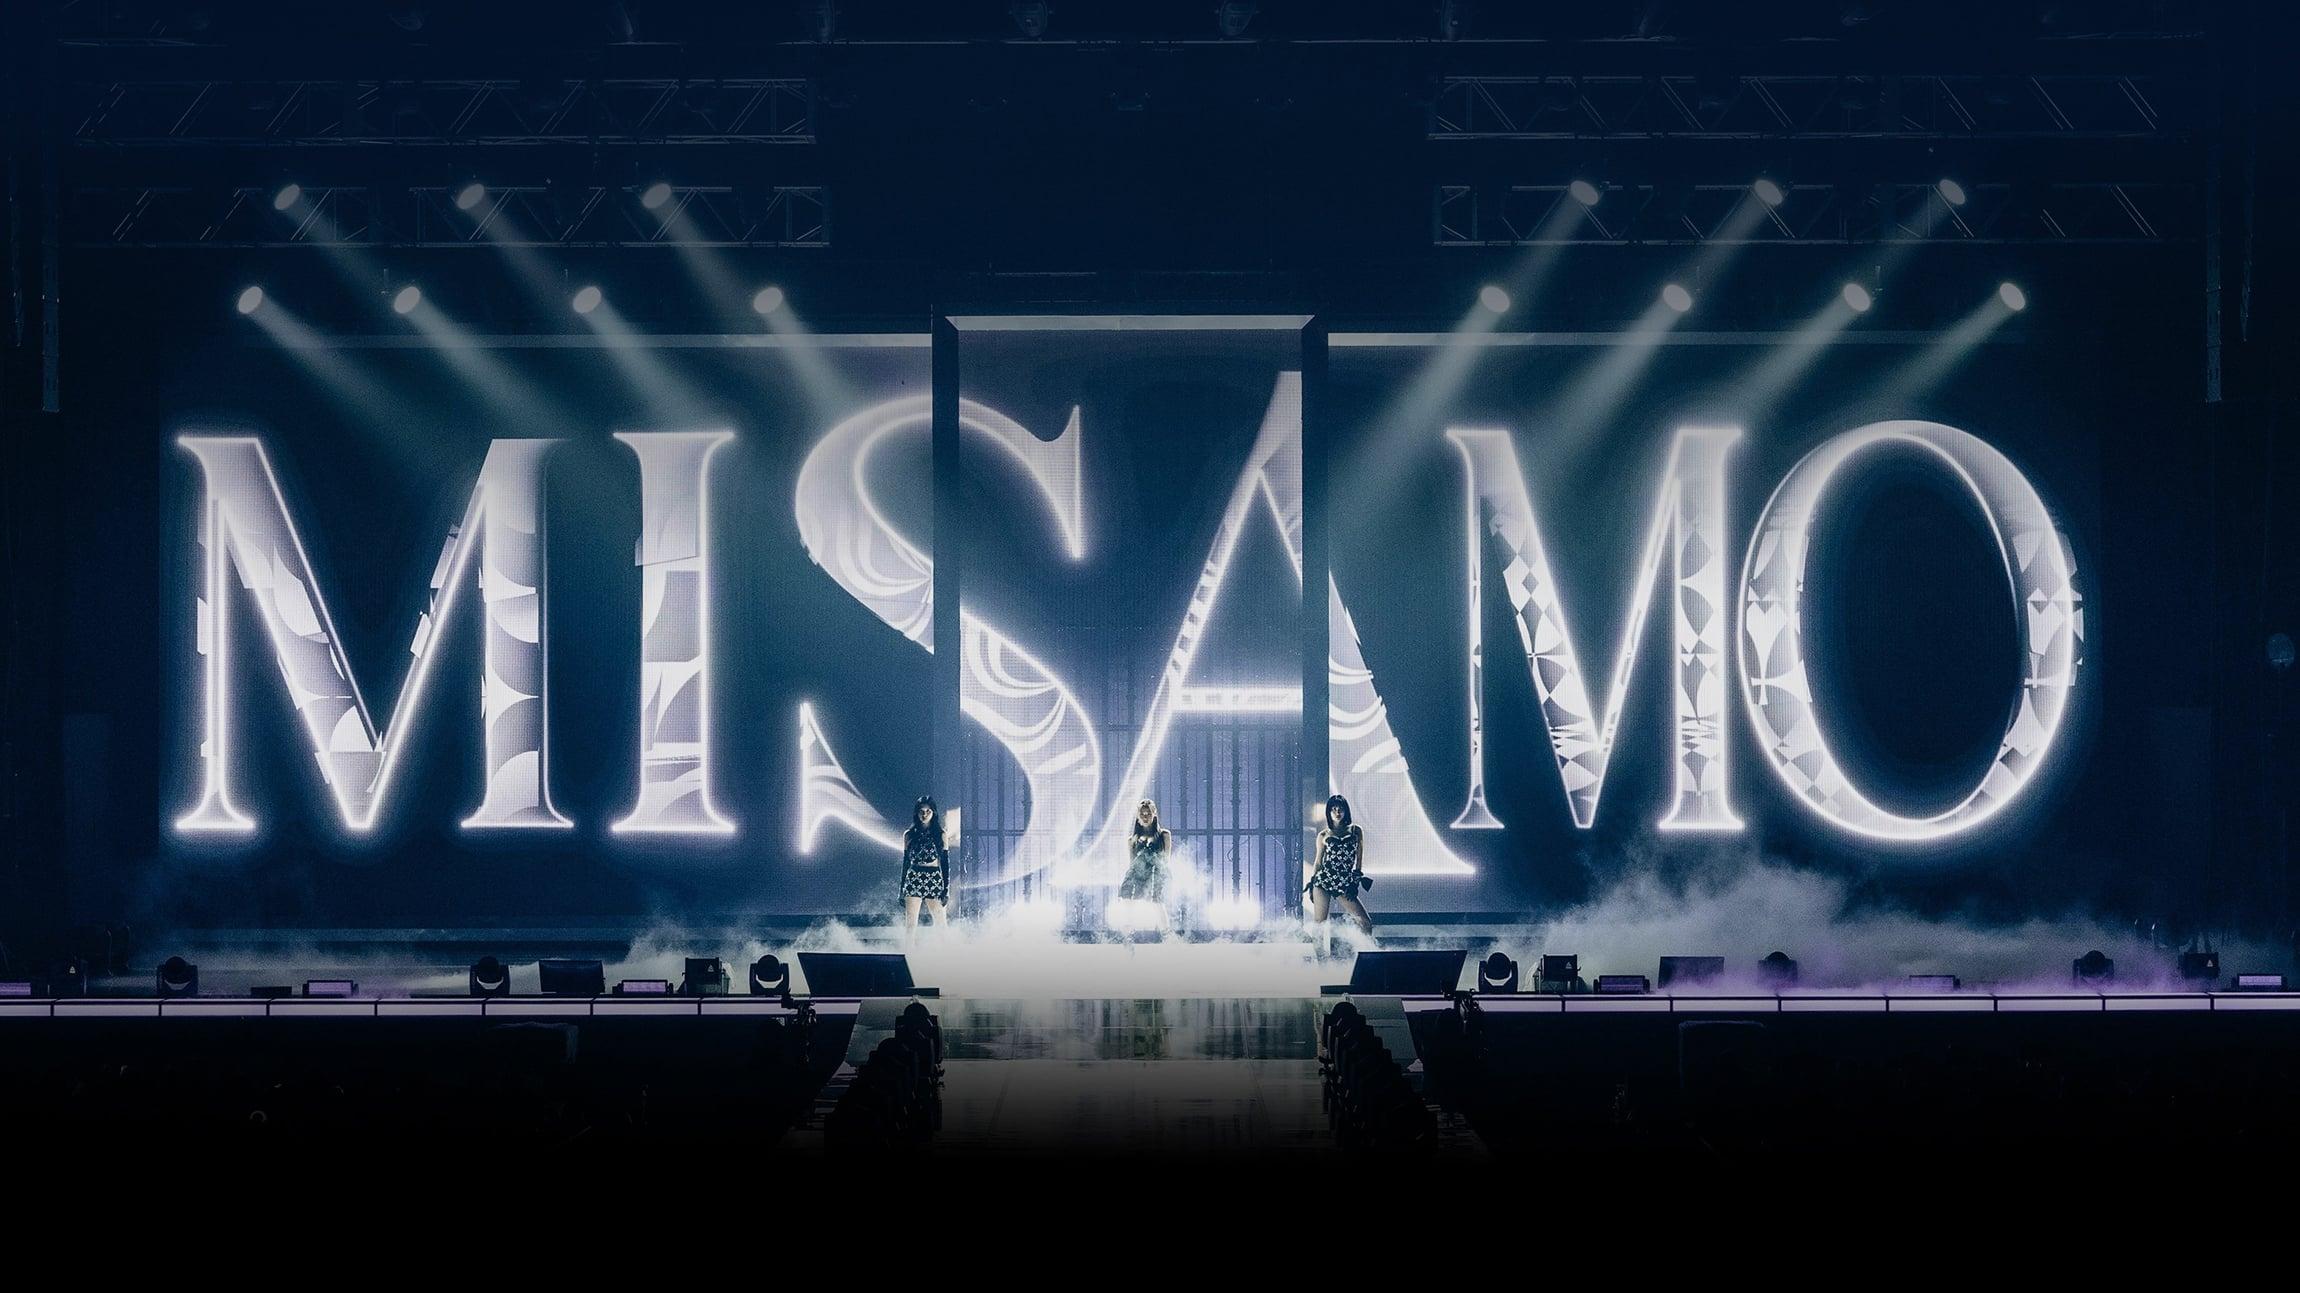 MISAMO JAPAN SHOWCASE "Masterpiece" backdrop